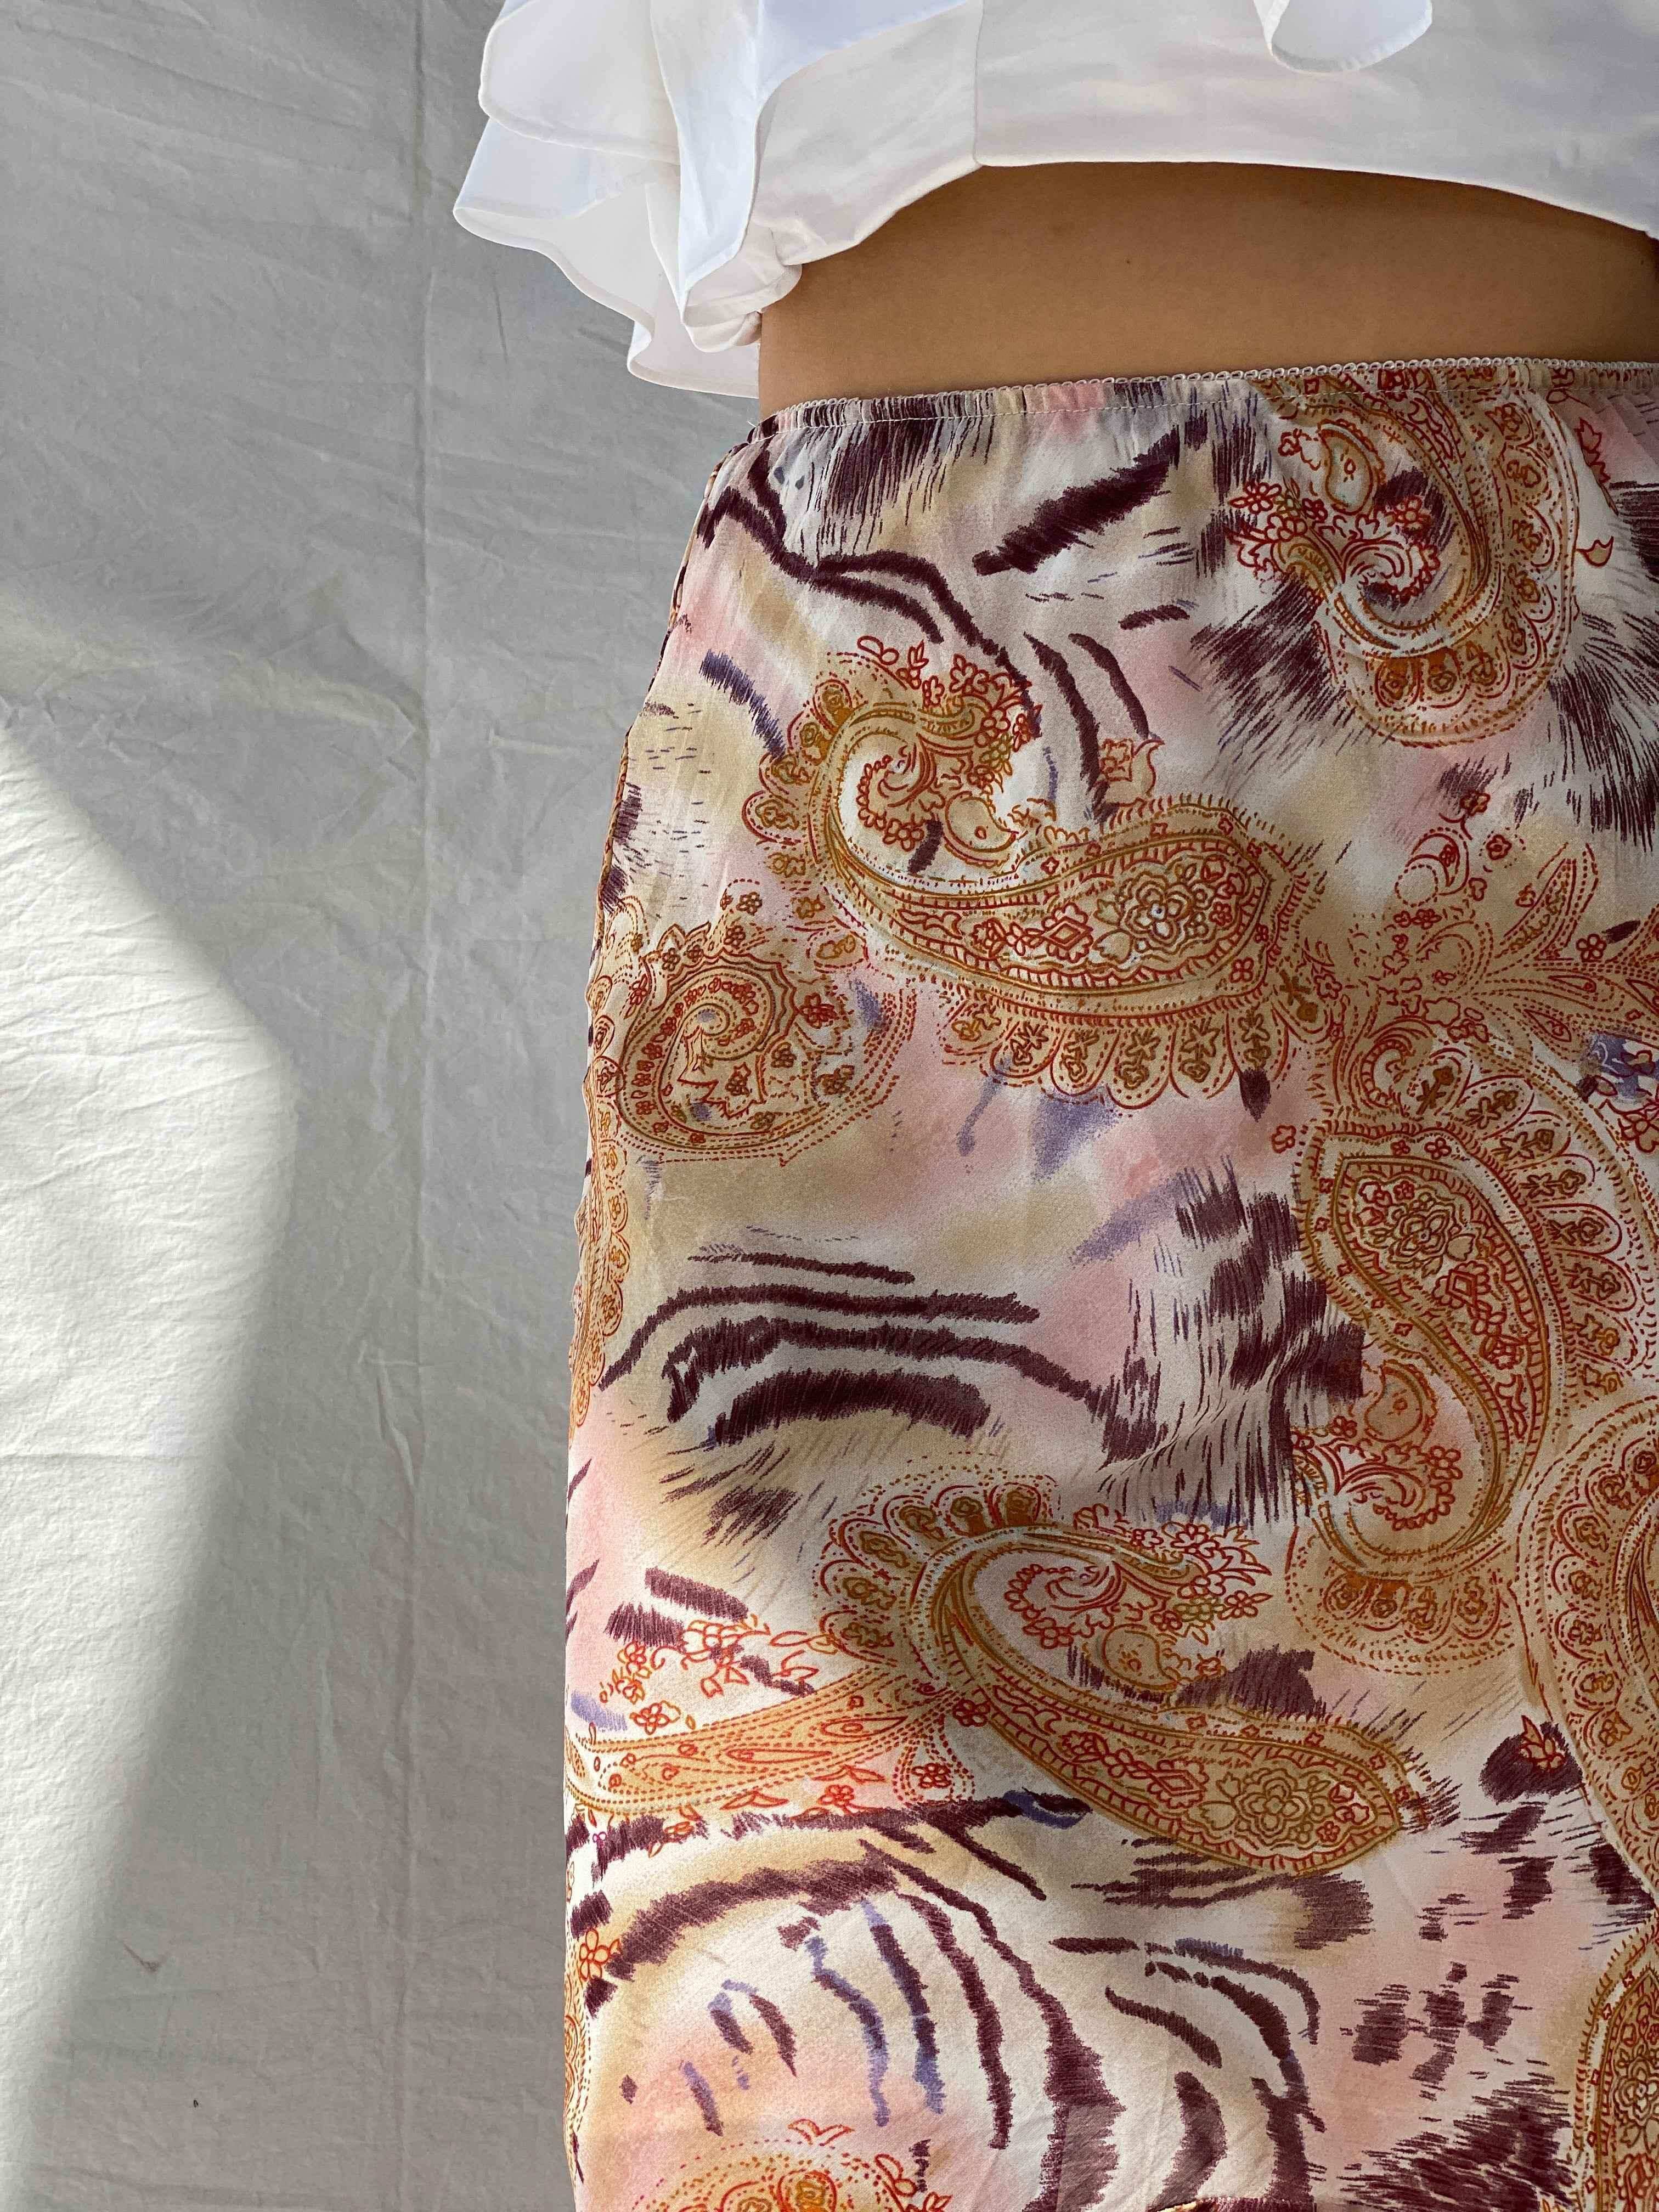 Vintage Xiagu Printed Midi Skirt - Balagan Vintage Midi Skirt Aseel, floral, floral skirt, midi skirt, NEW IN